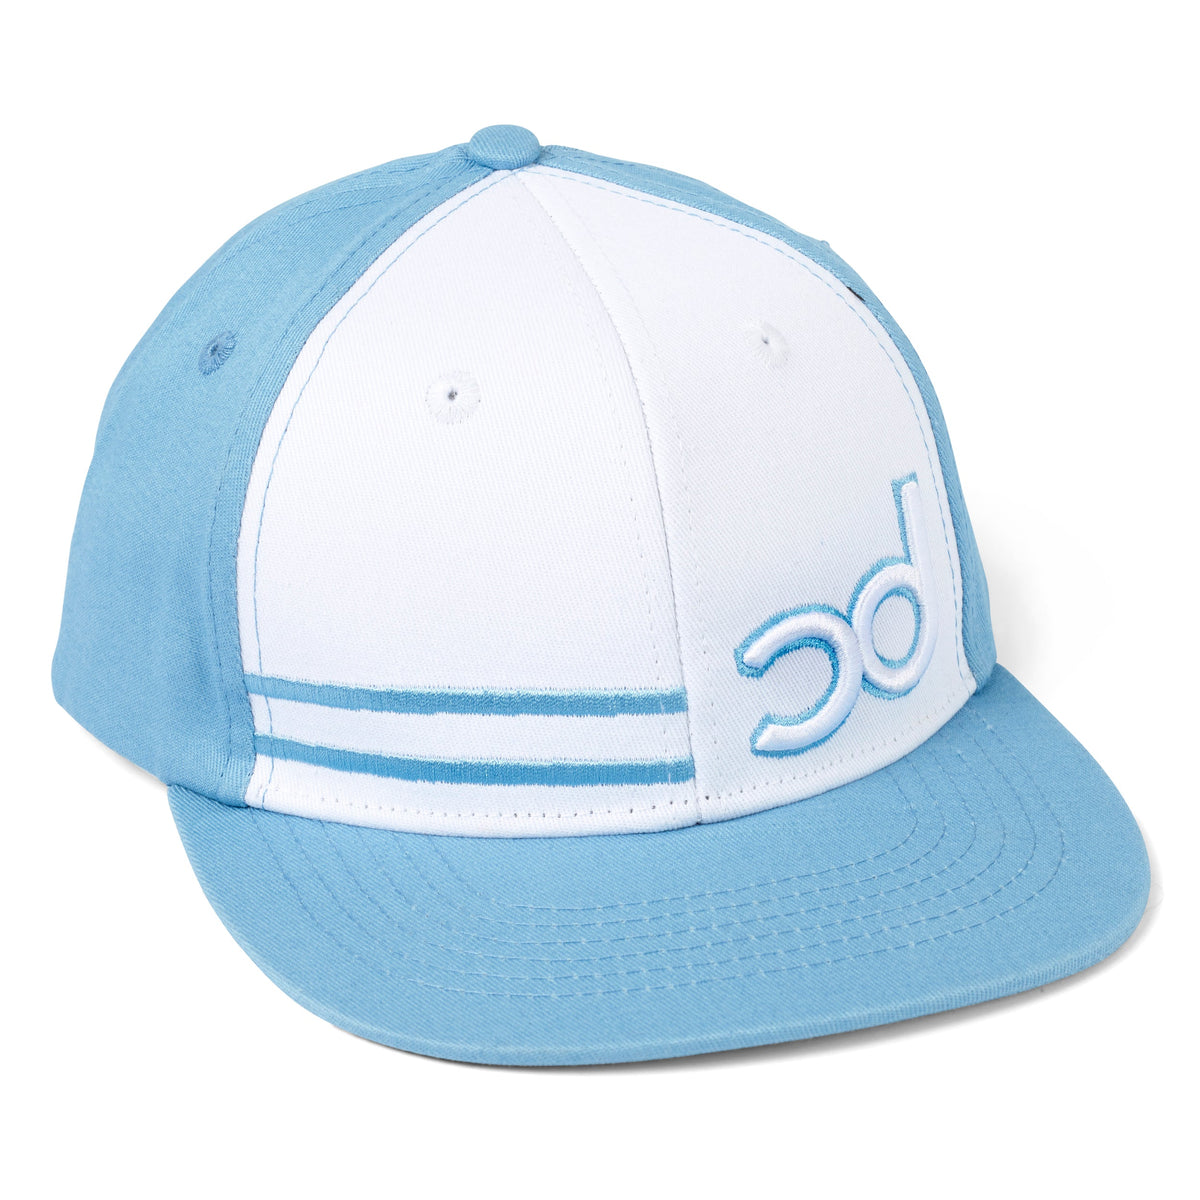 White with Light Blue Chinnydipper Junior Snapback Golf Cap